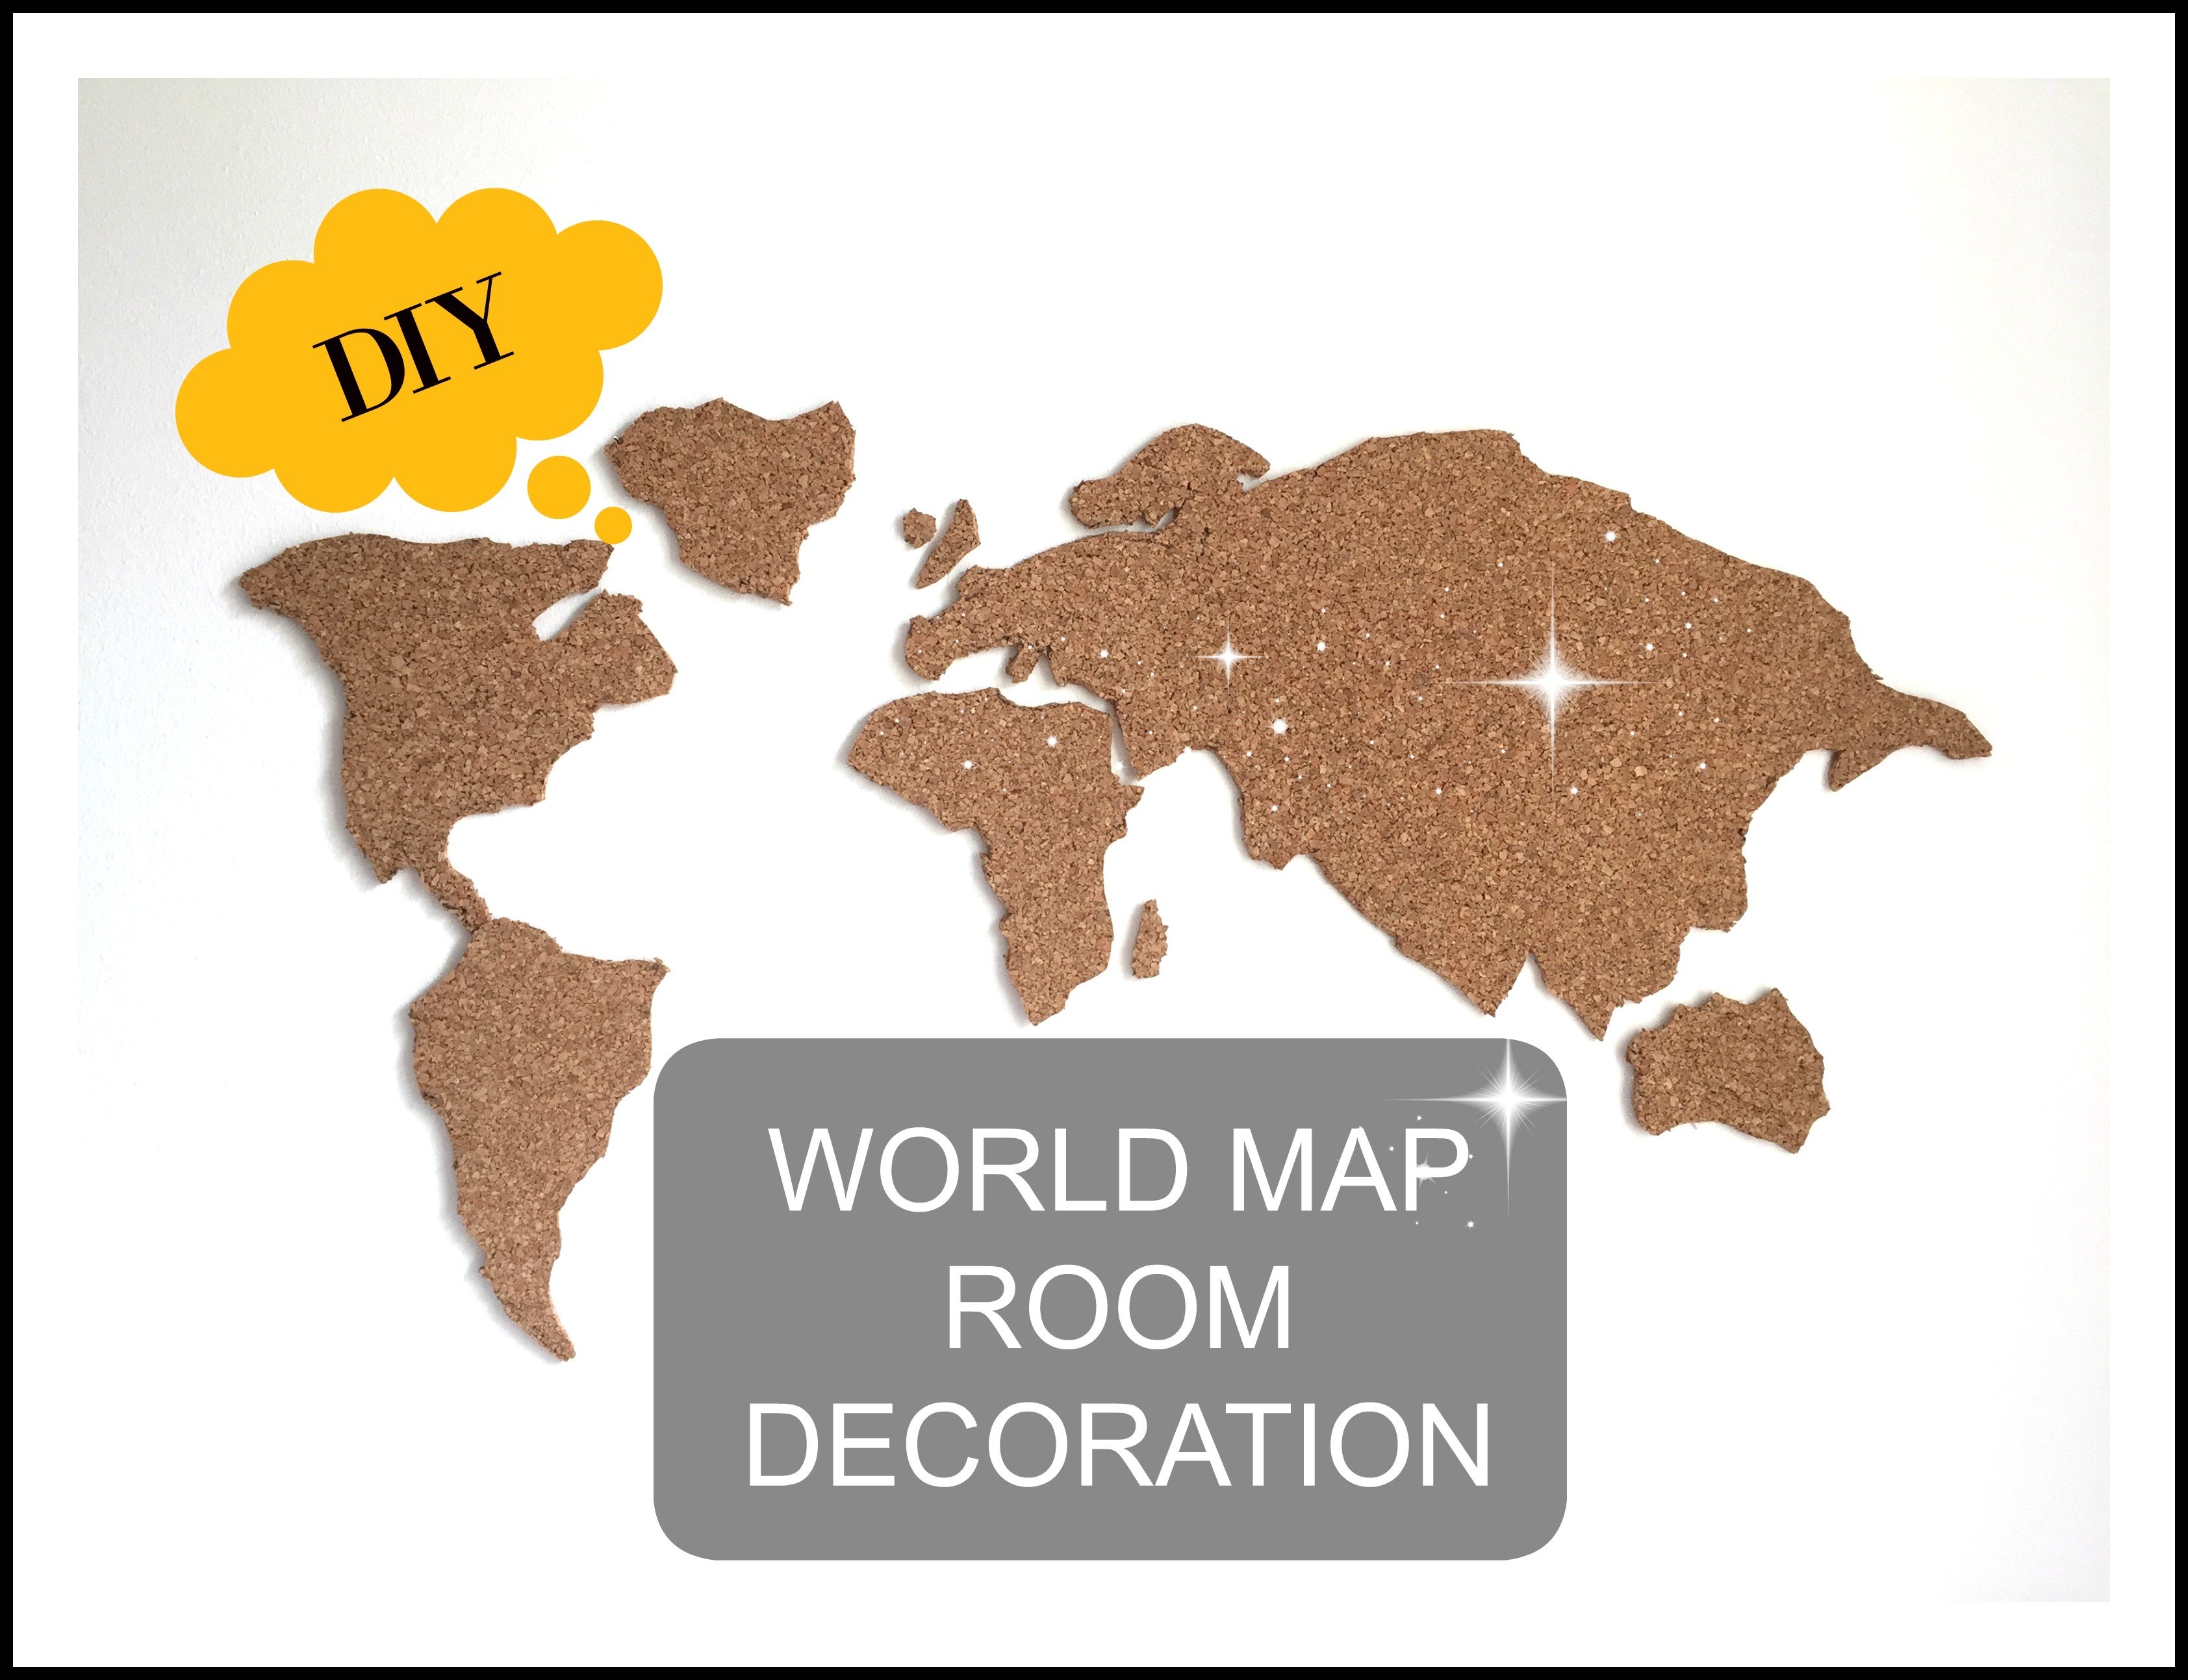 DIY WORLDMAP ROOM DECOR